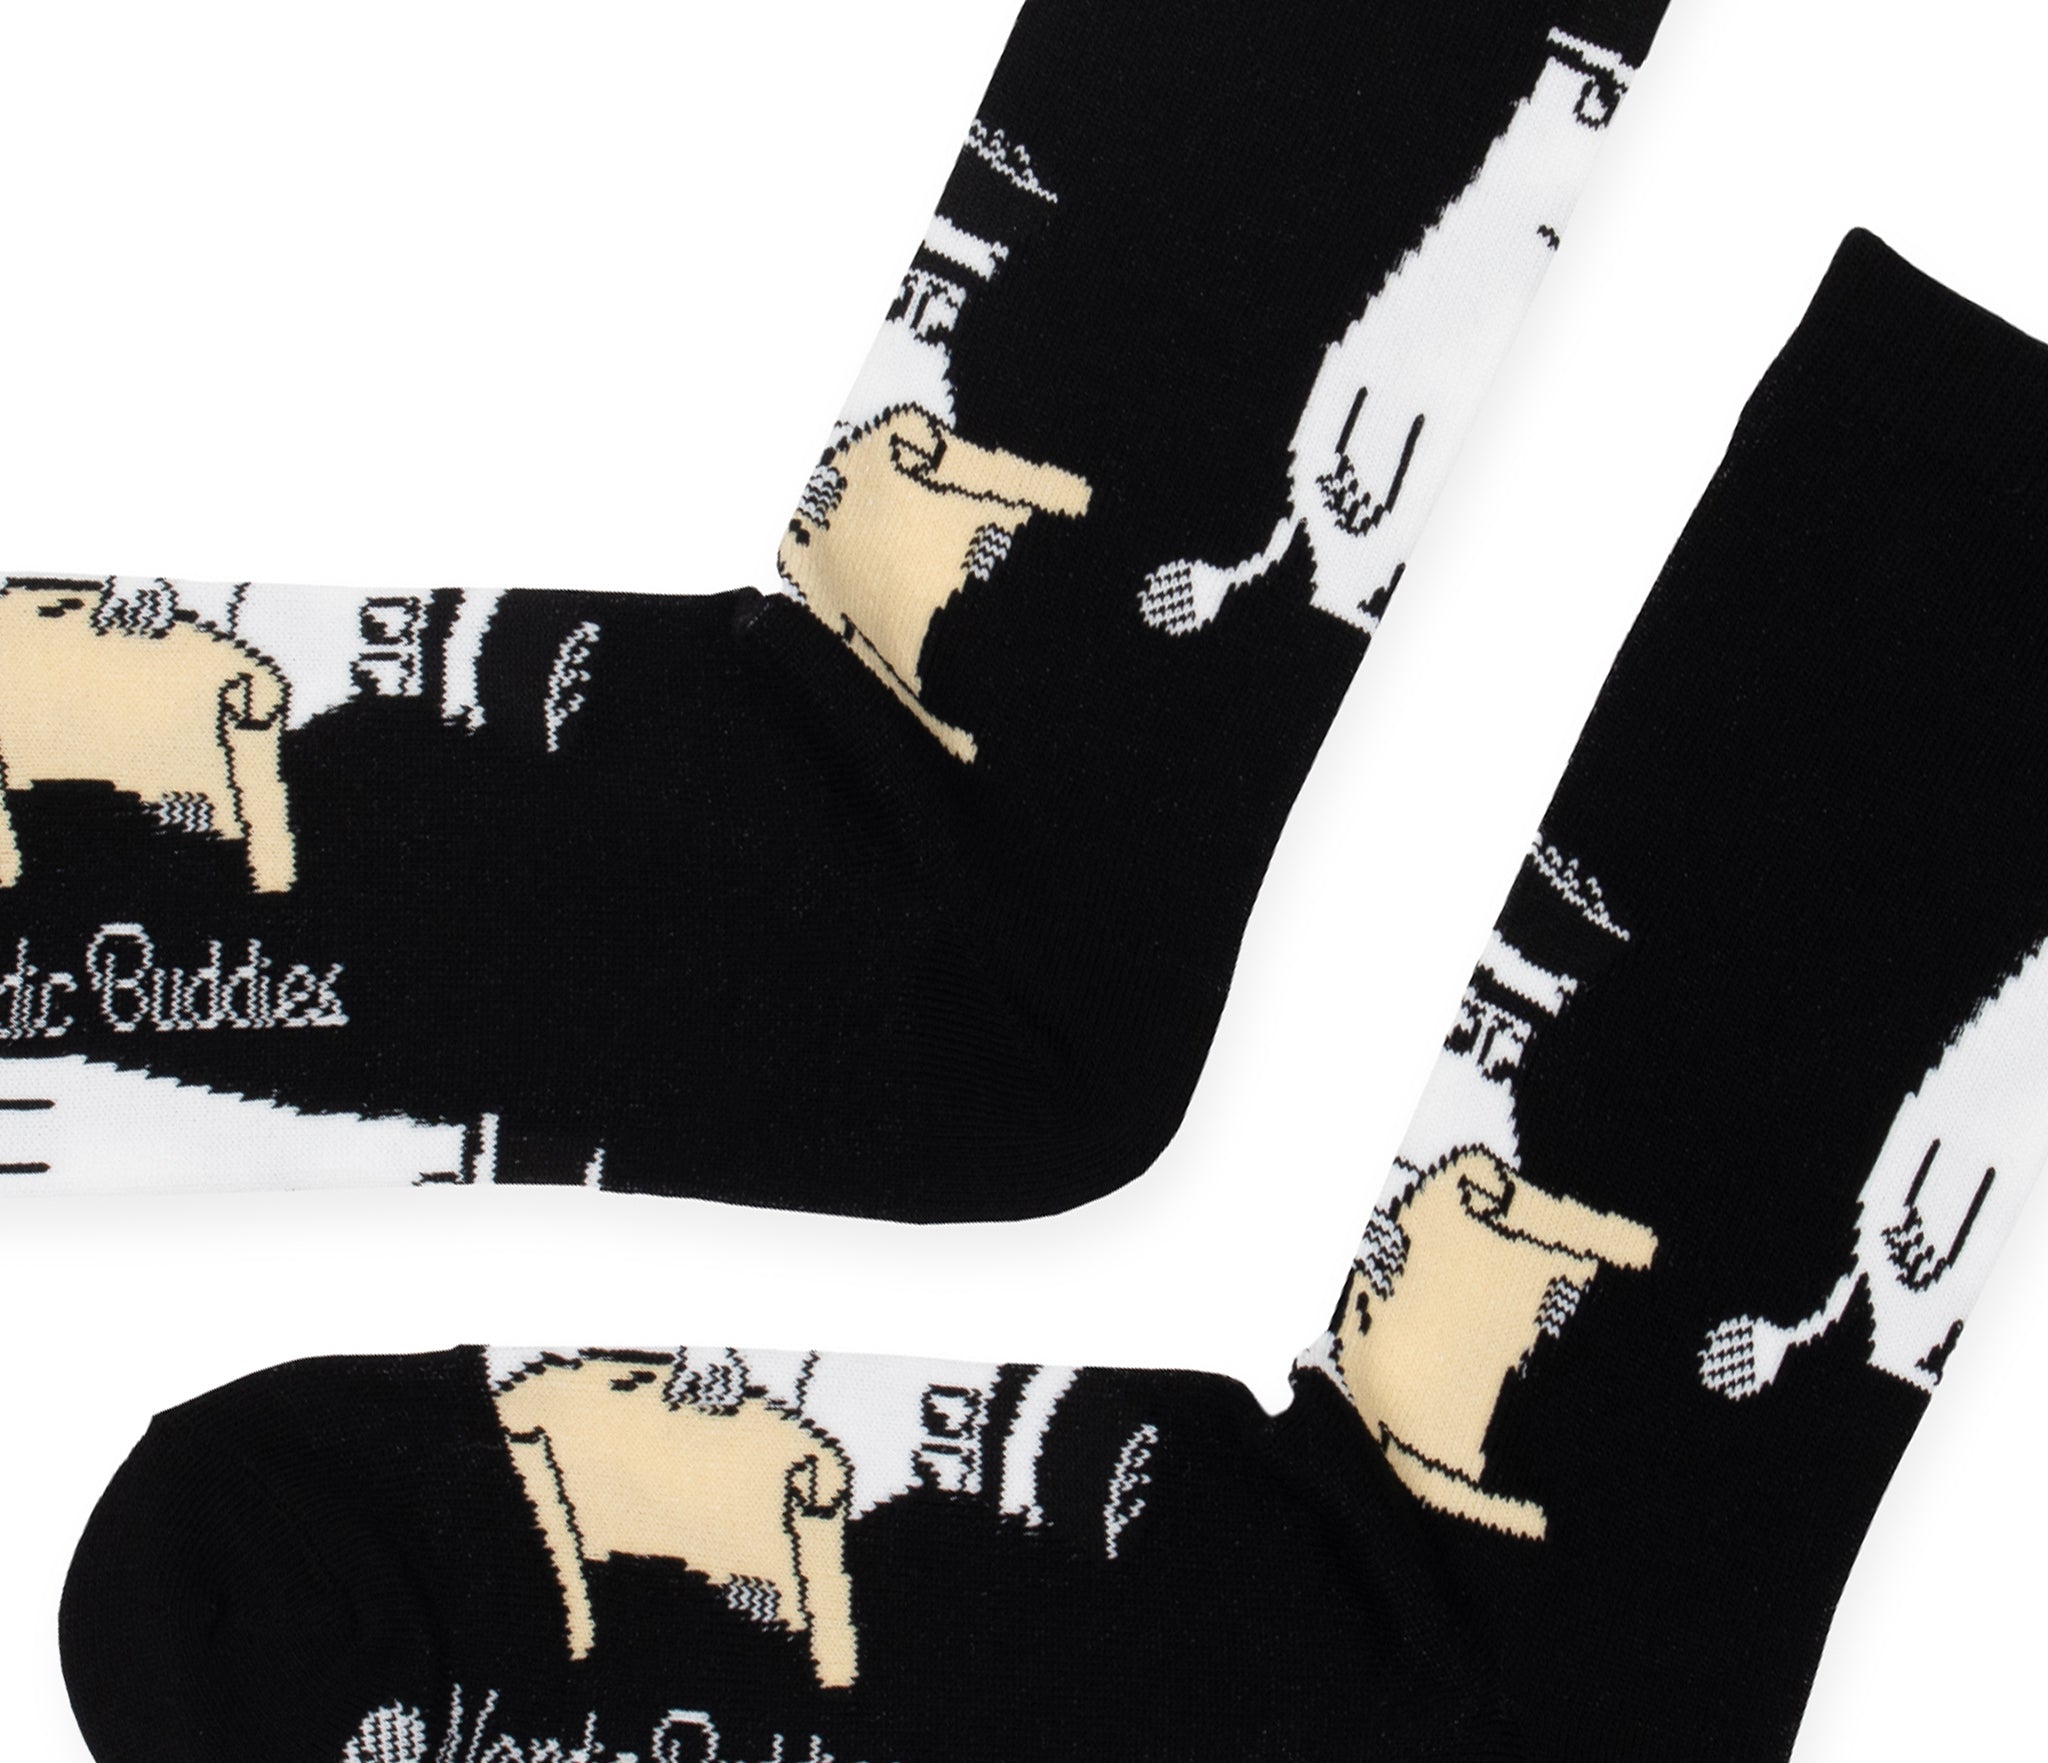 Moominpappa Men Socks - Black